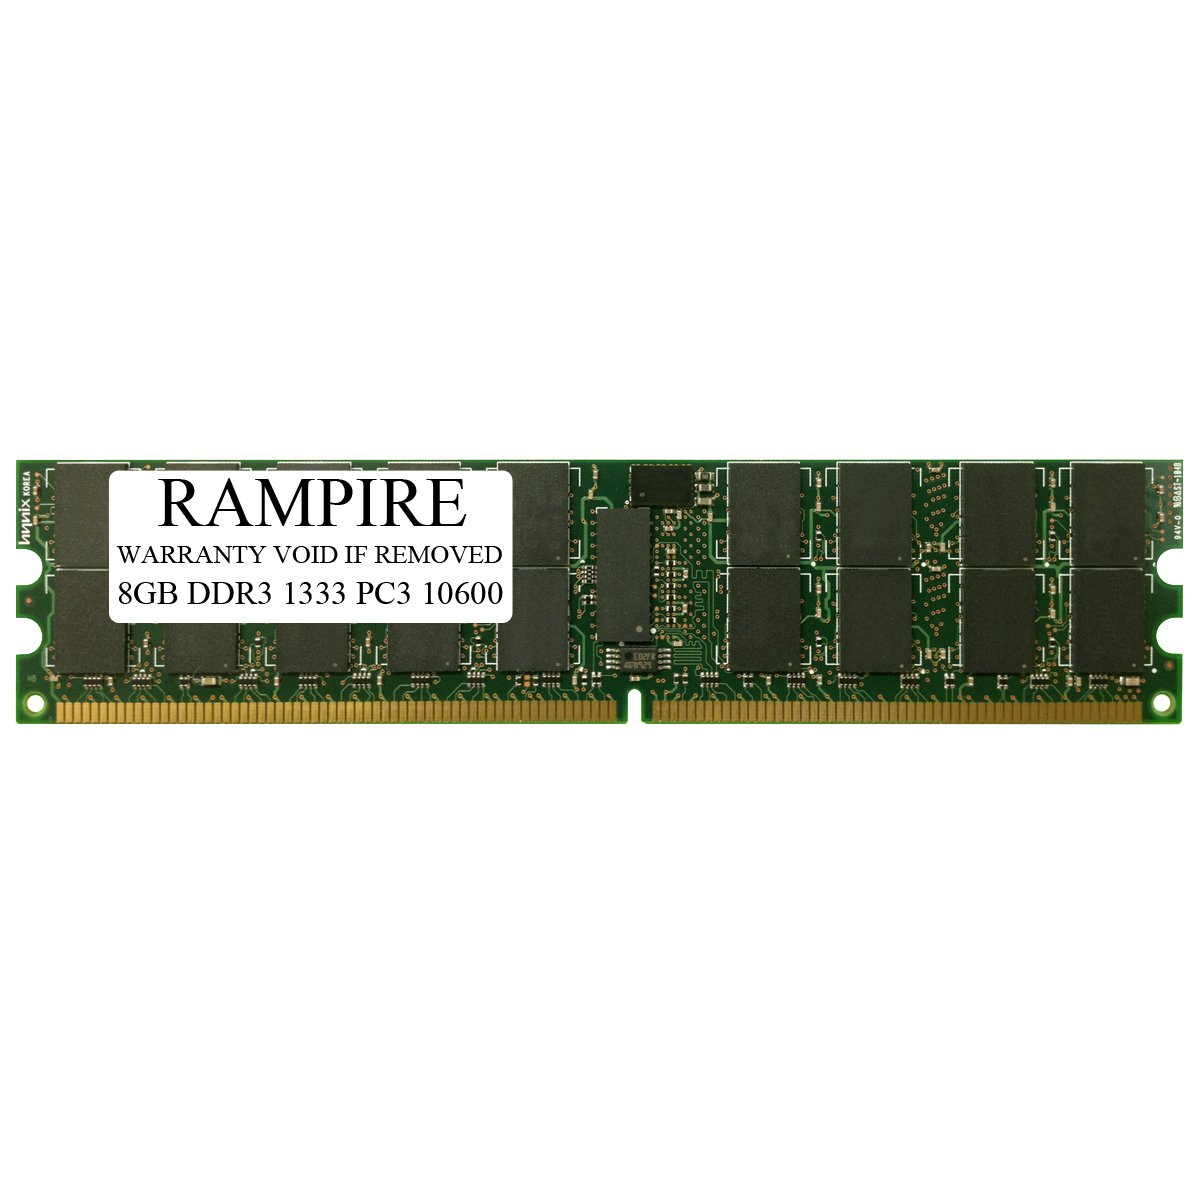 RAMPIRE 8GB DDR3 1333 (PC3 10600) 240-Pin SDRAM 1Rx8 Standard Profile 1.35V ECC Registered Server Memory